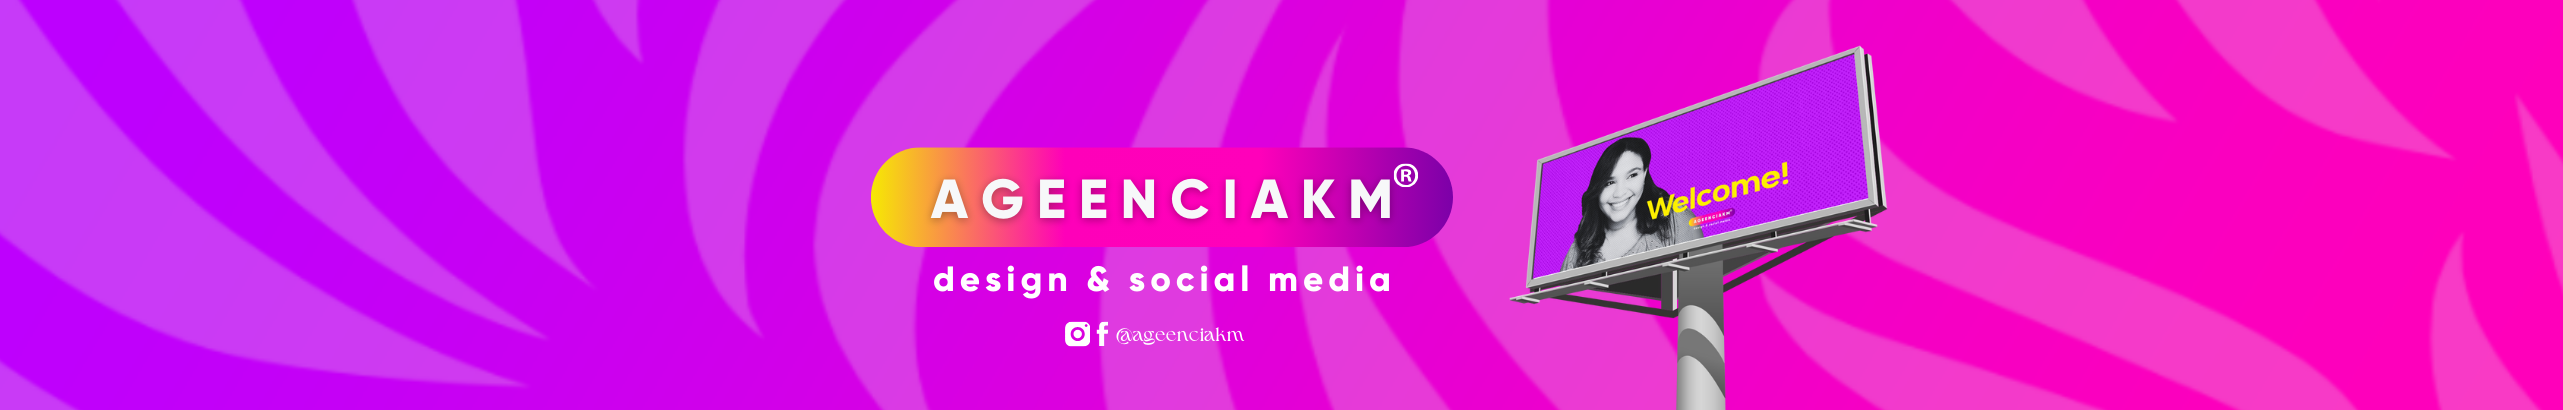 Banner profilu uživatele AGEENCIAKM® | Kayenne Melo